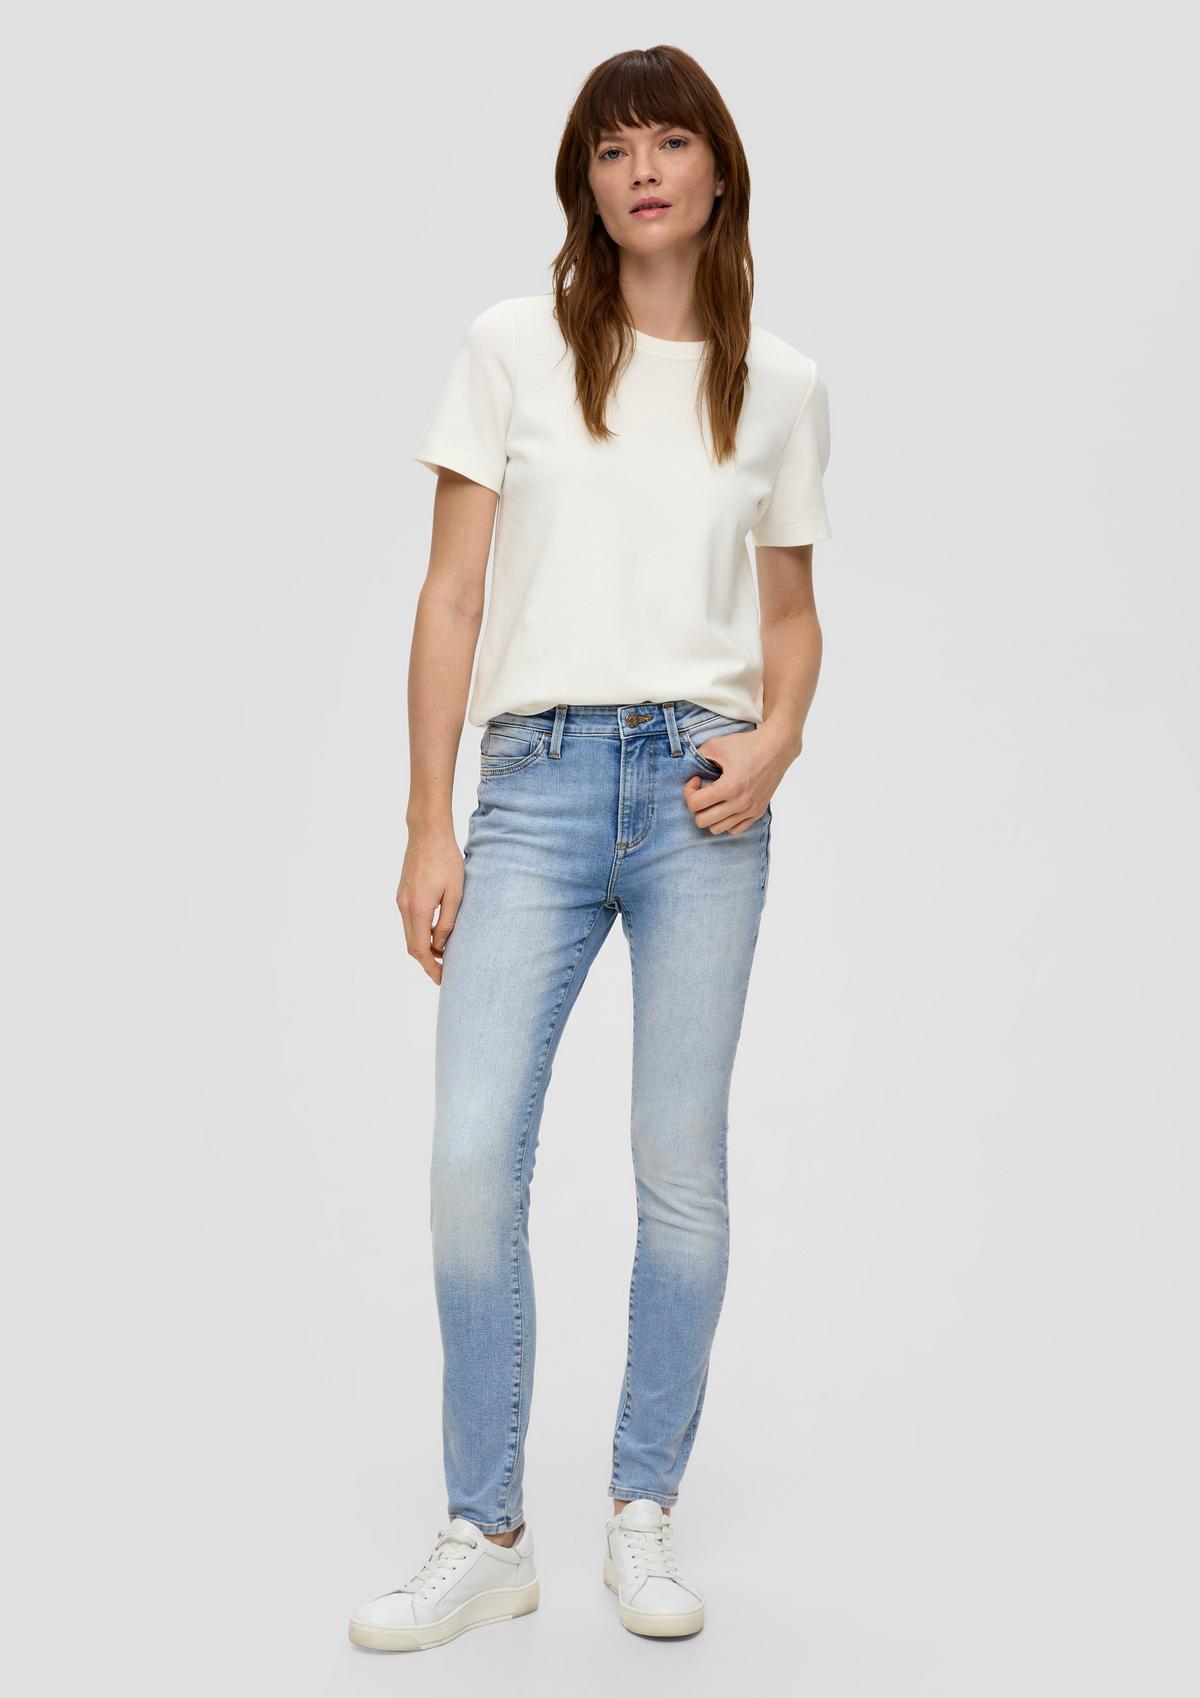 Izabell jeans / skinny fit / mid rise / skinny leg - stone